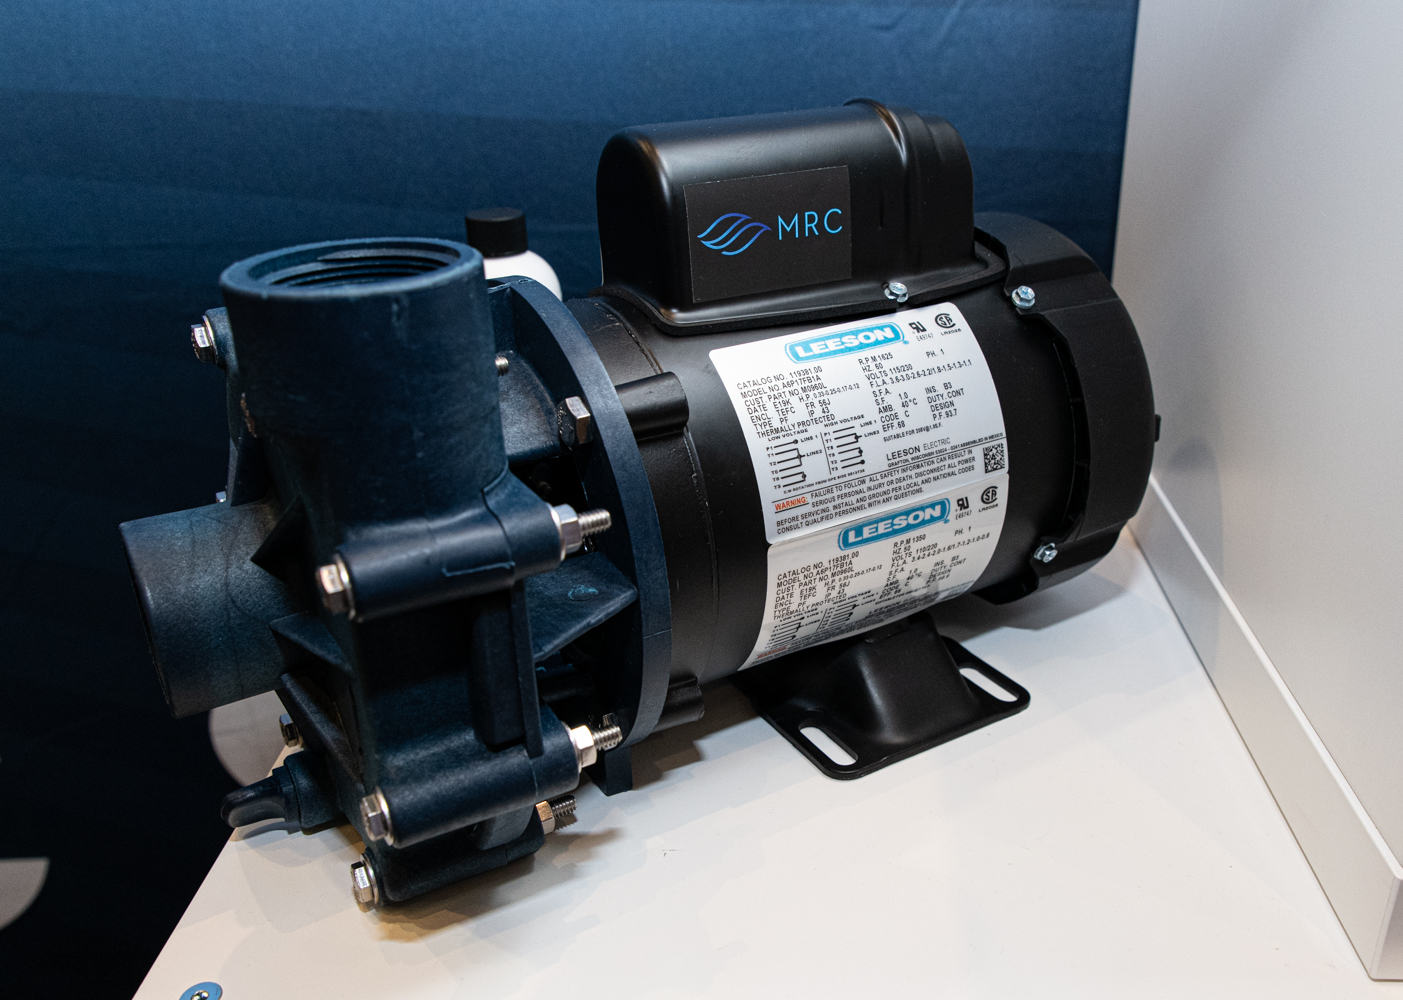 MACNA 2019 Orlando Coverage: MRC HydroTek pumps